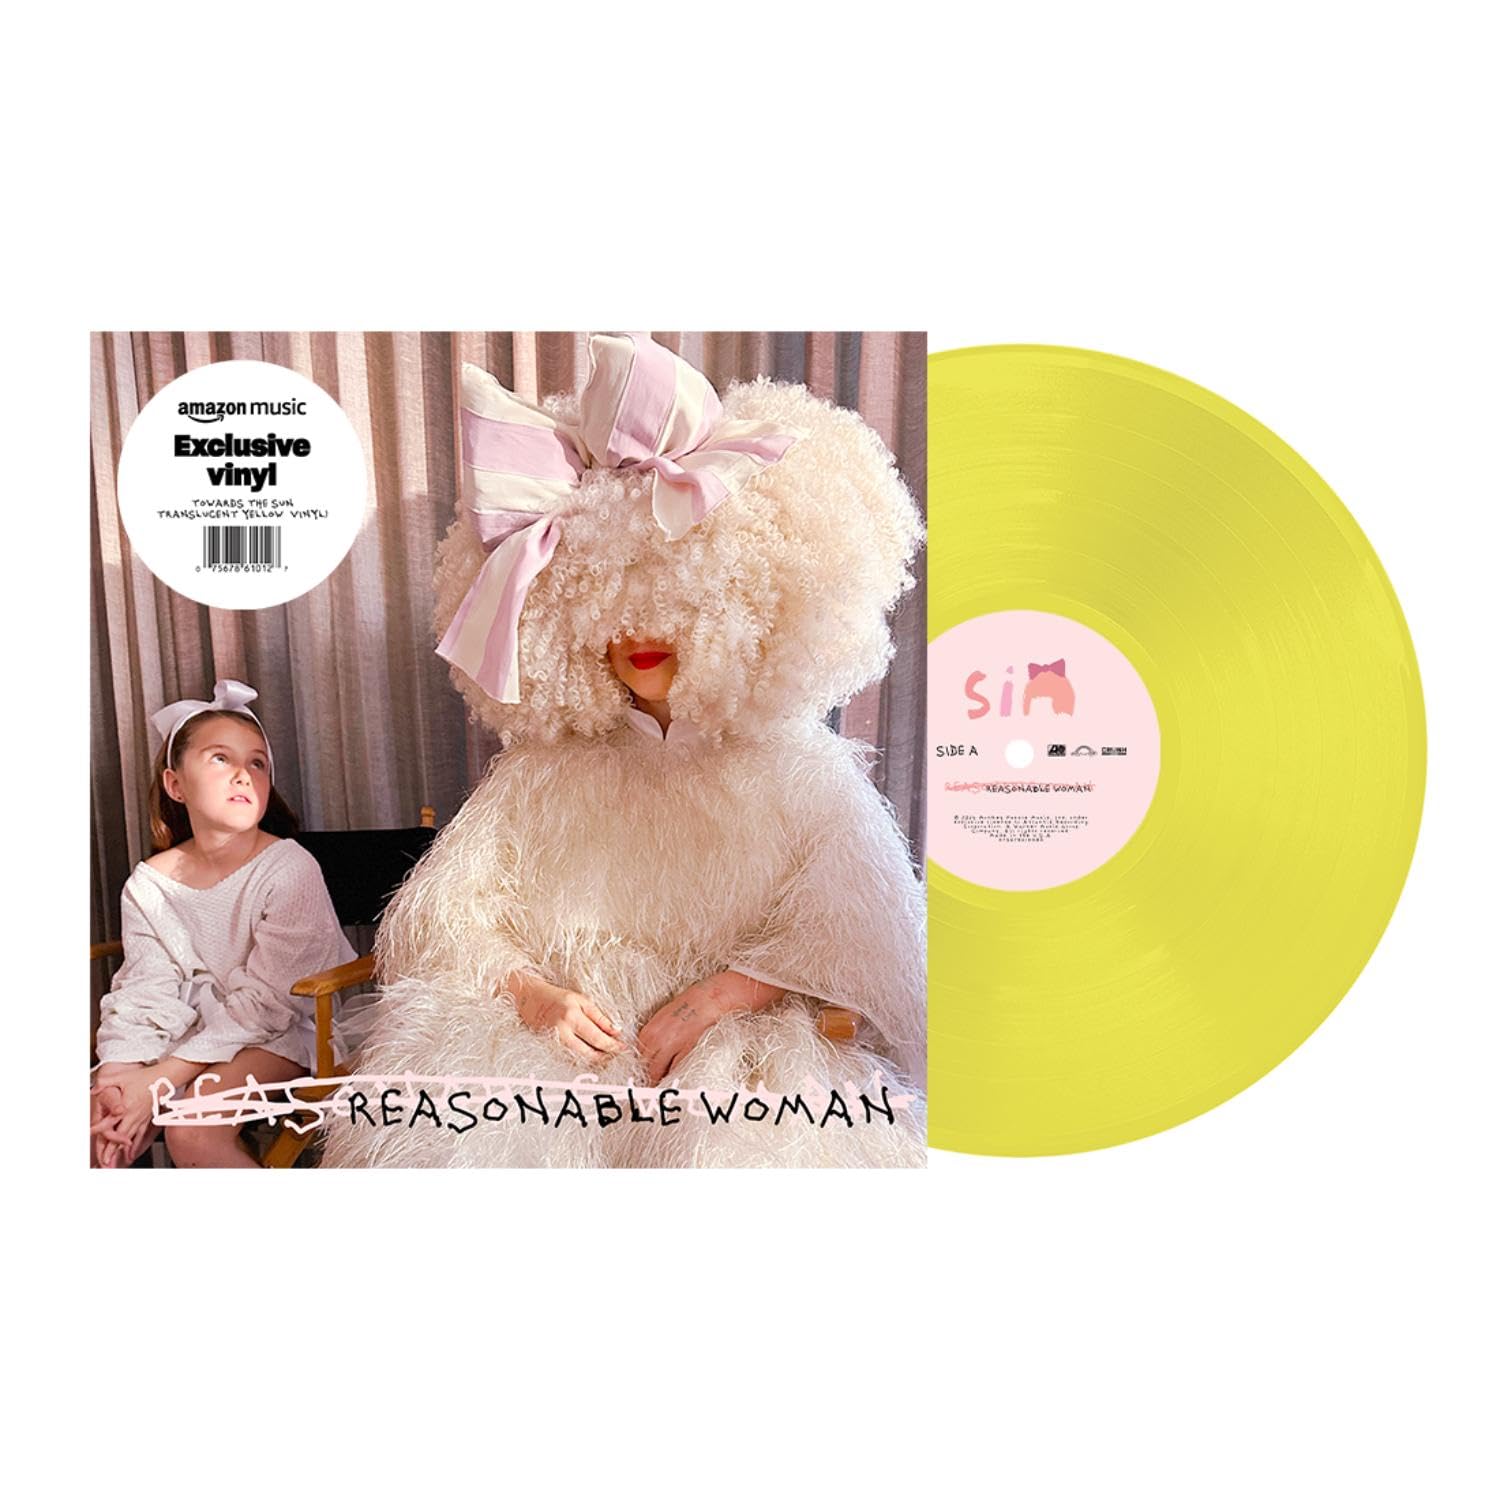 SIA – REASONABLE WOMAN yellow vinyl LP